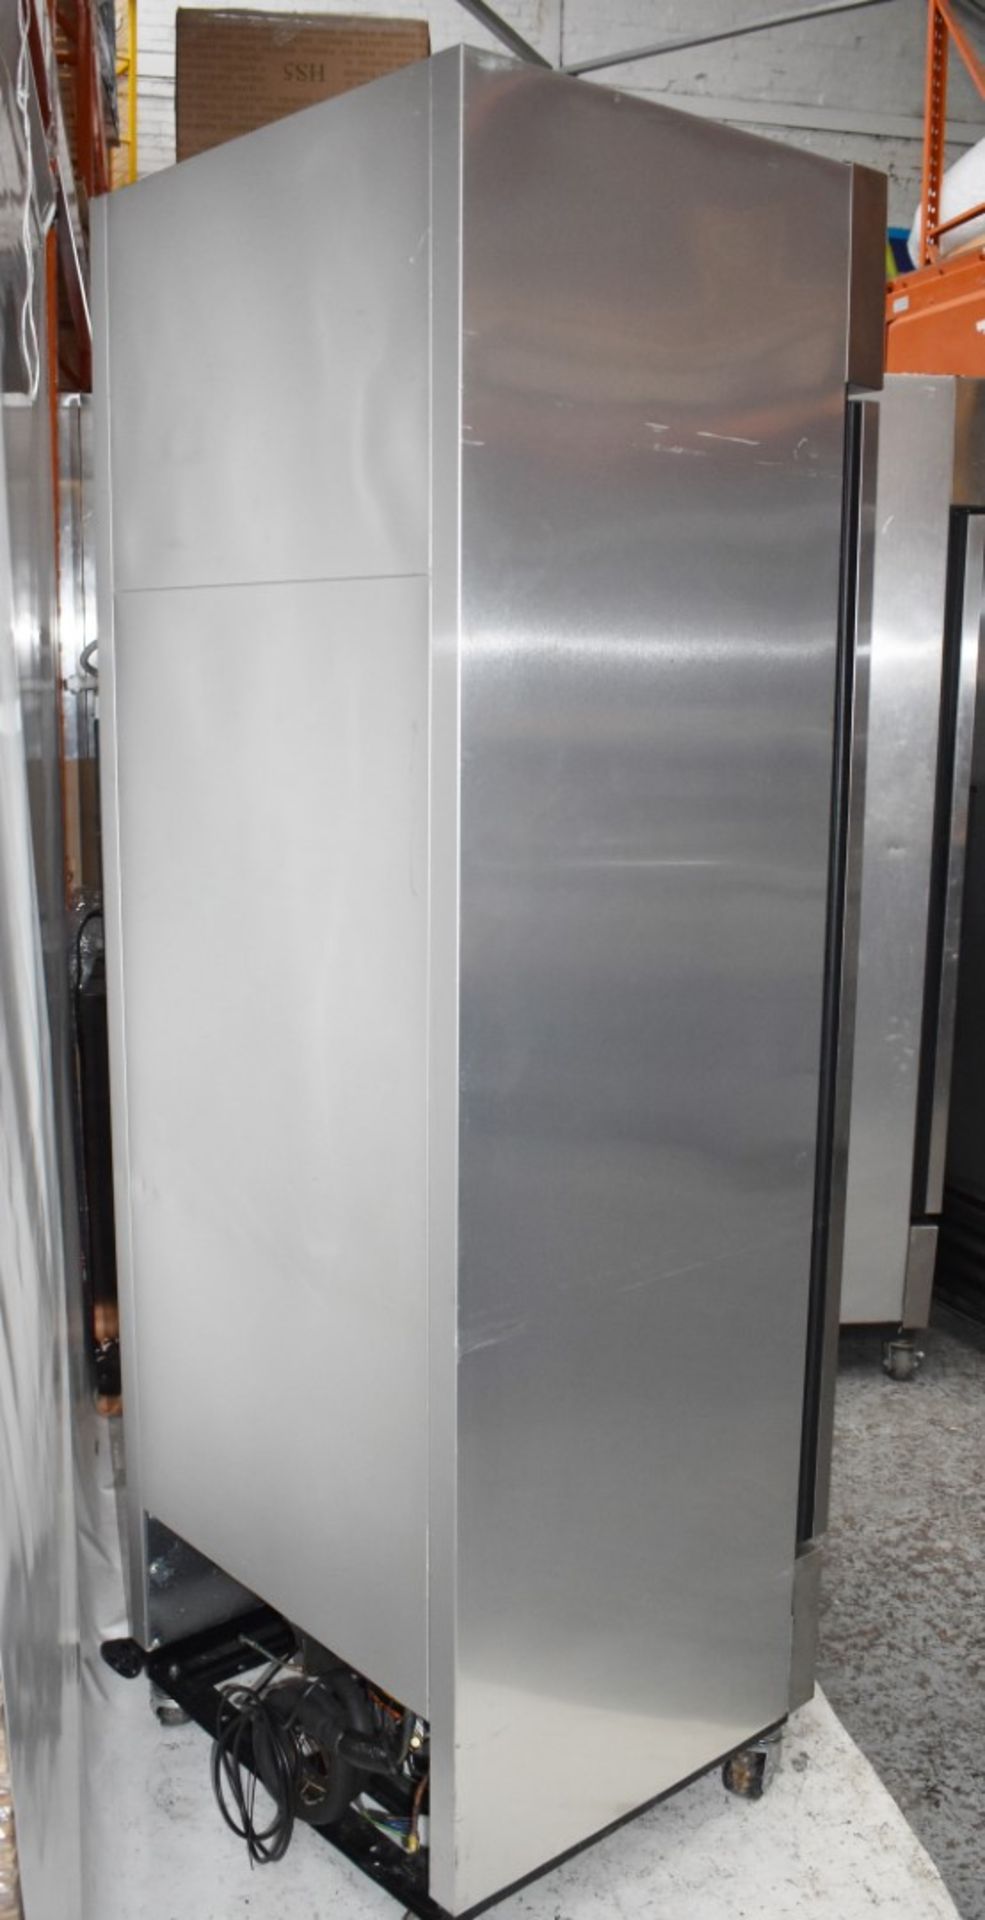 1 x True T-19FZ Upright Single Solid Door Freezer - Stainless Steel Finish With Aluminium Interior - - Image 9 of 9